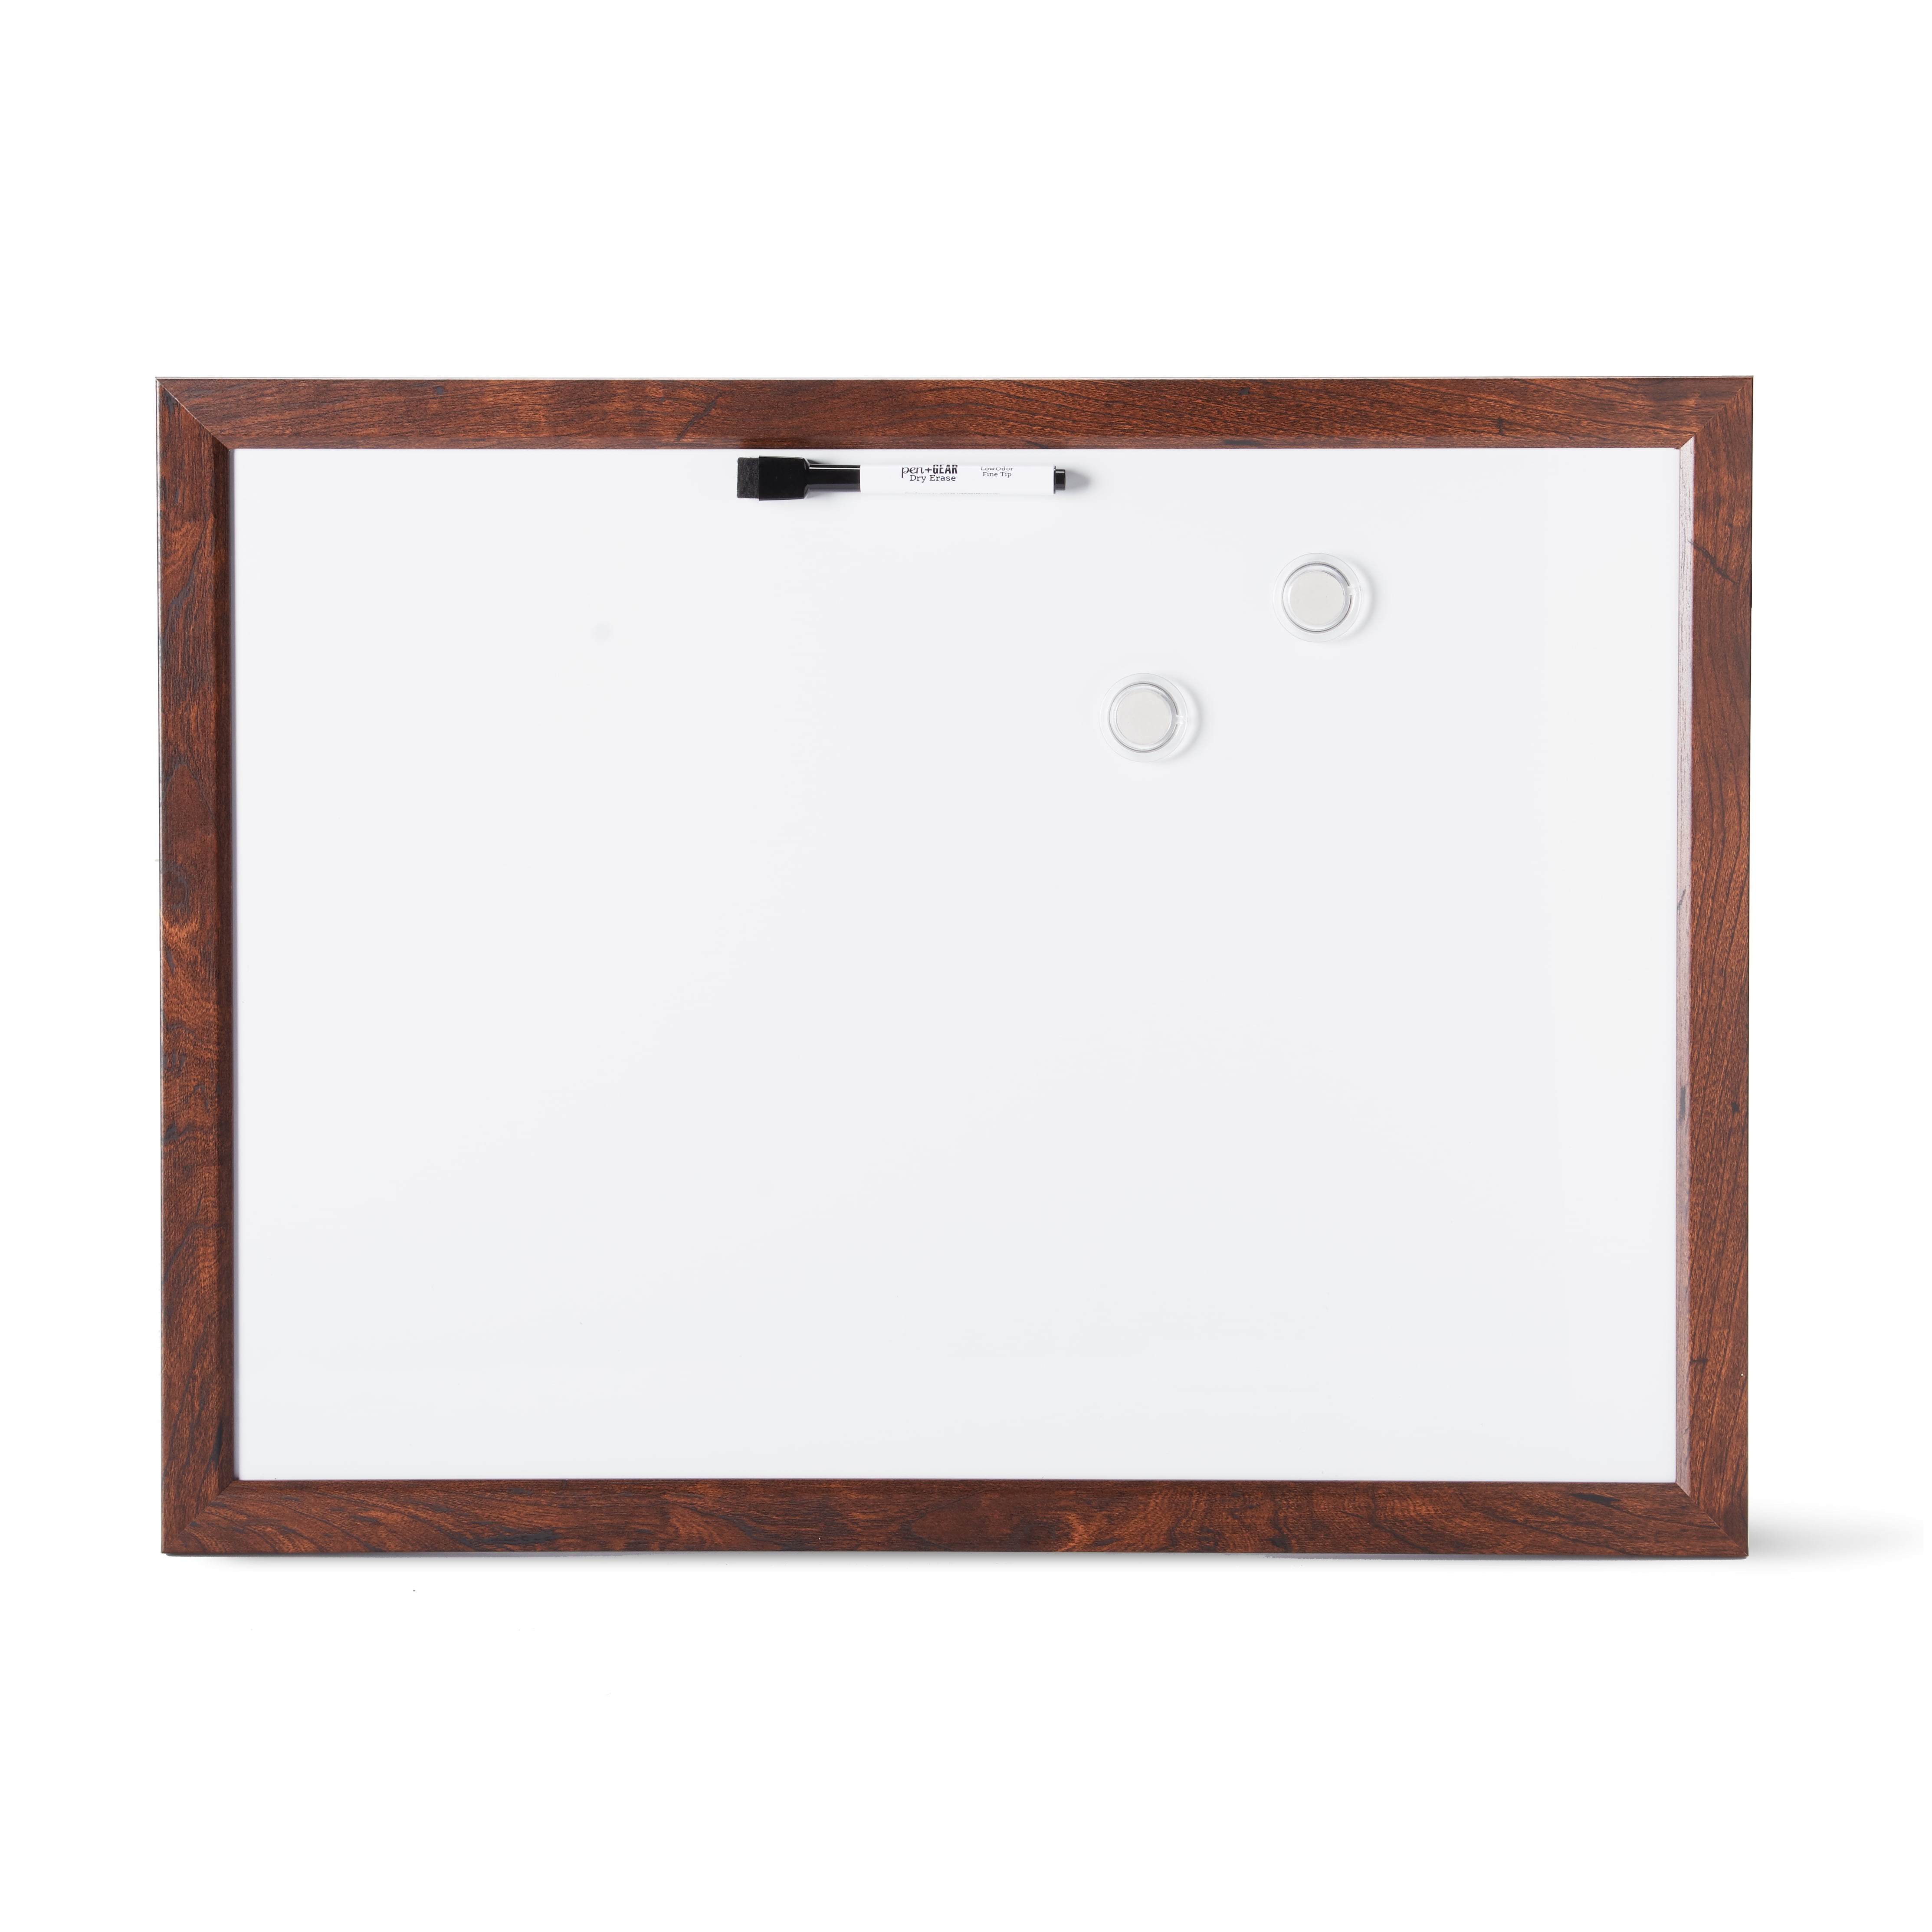 Pen+Gear Magnetic Dry Erase Board, White Boards 17" x 23", Wooden Frame